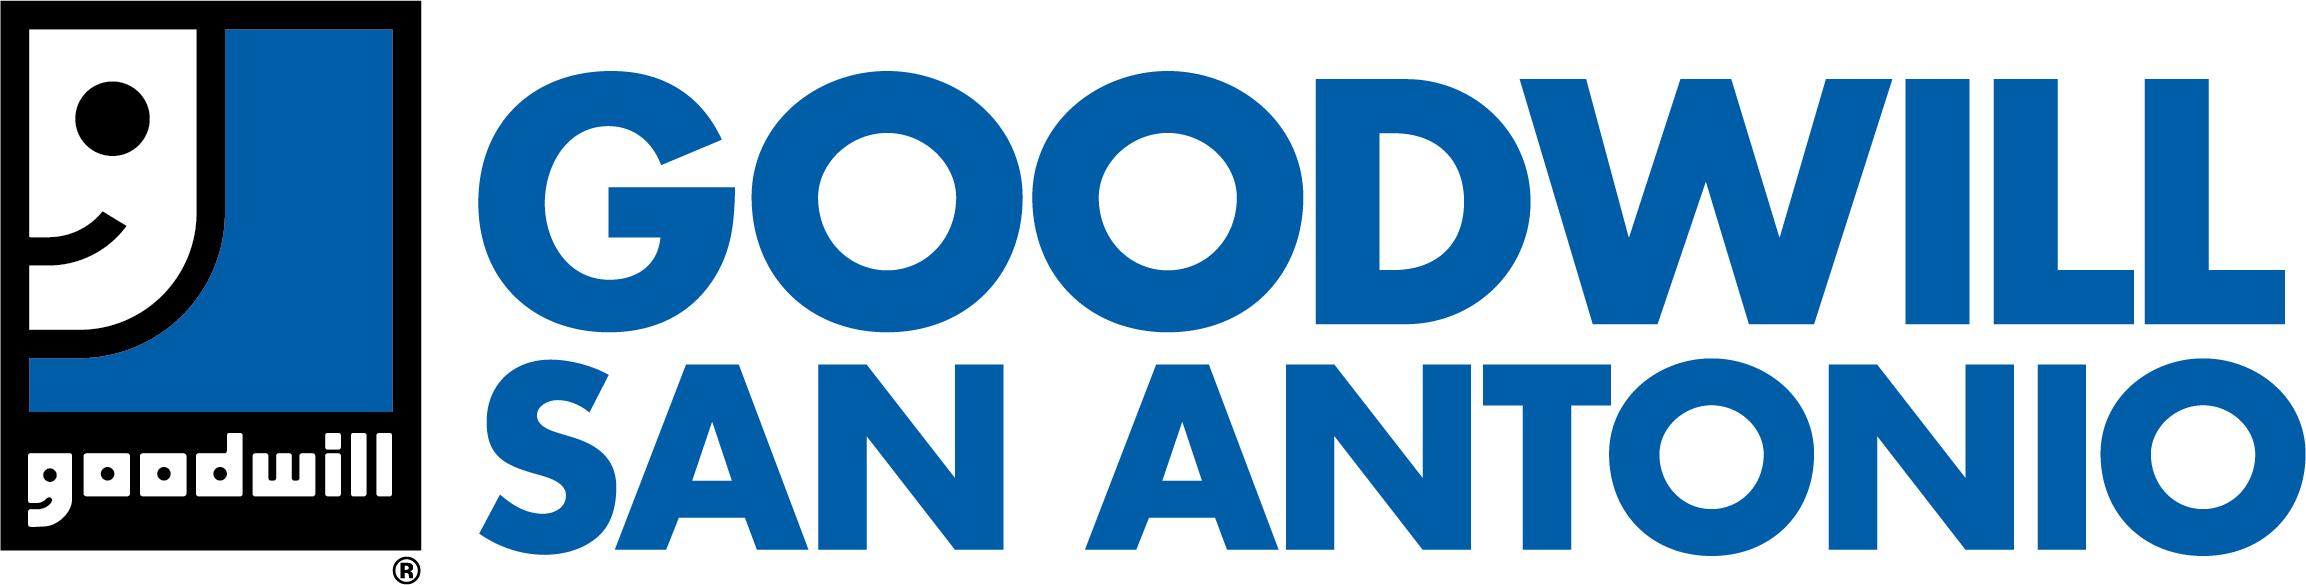 Goodwill San Antonio logo